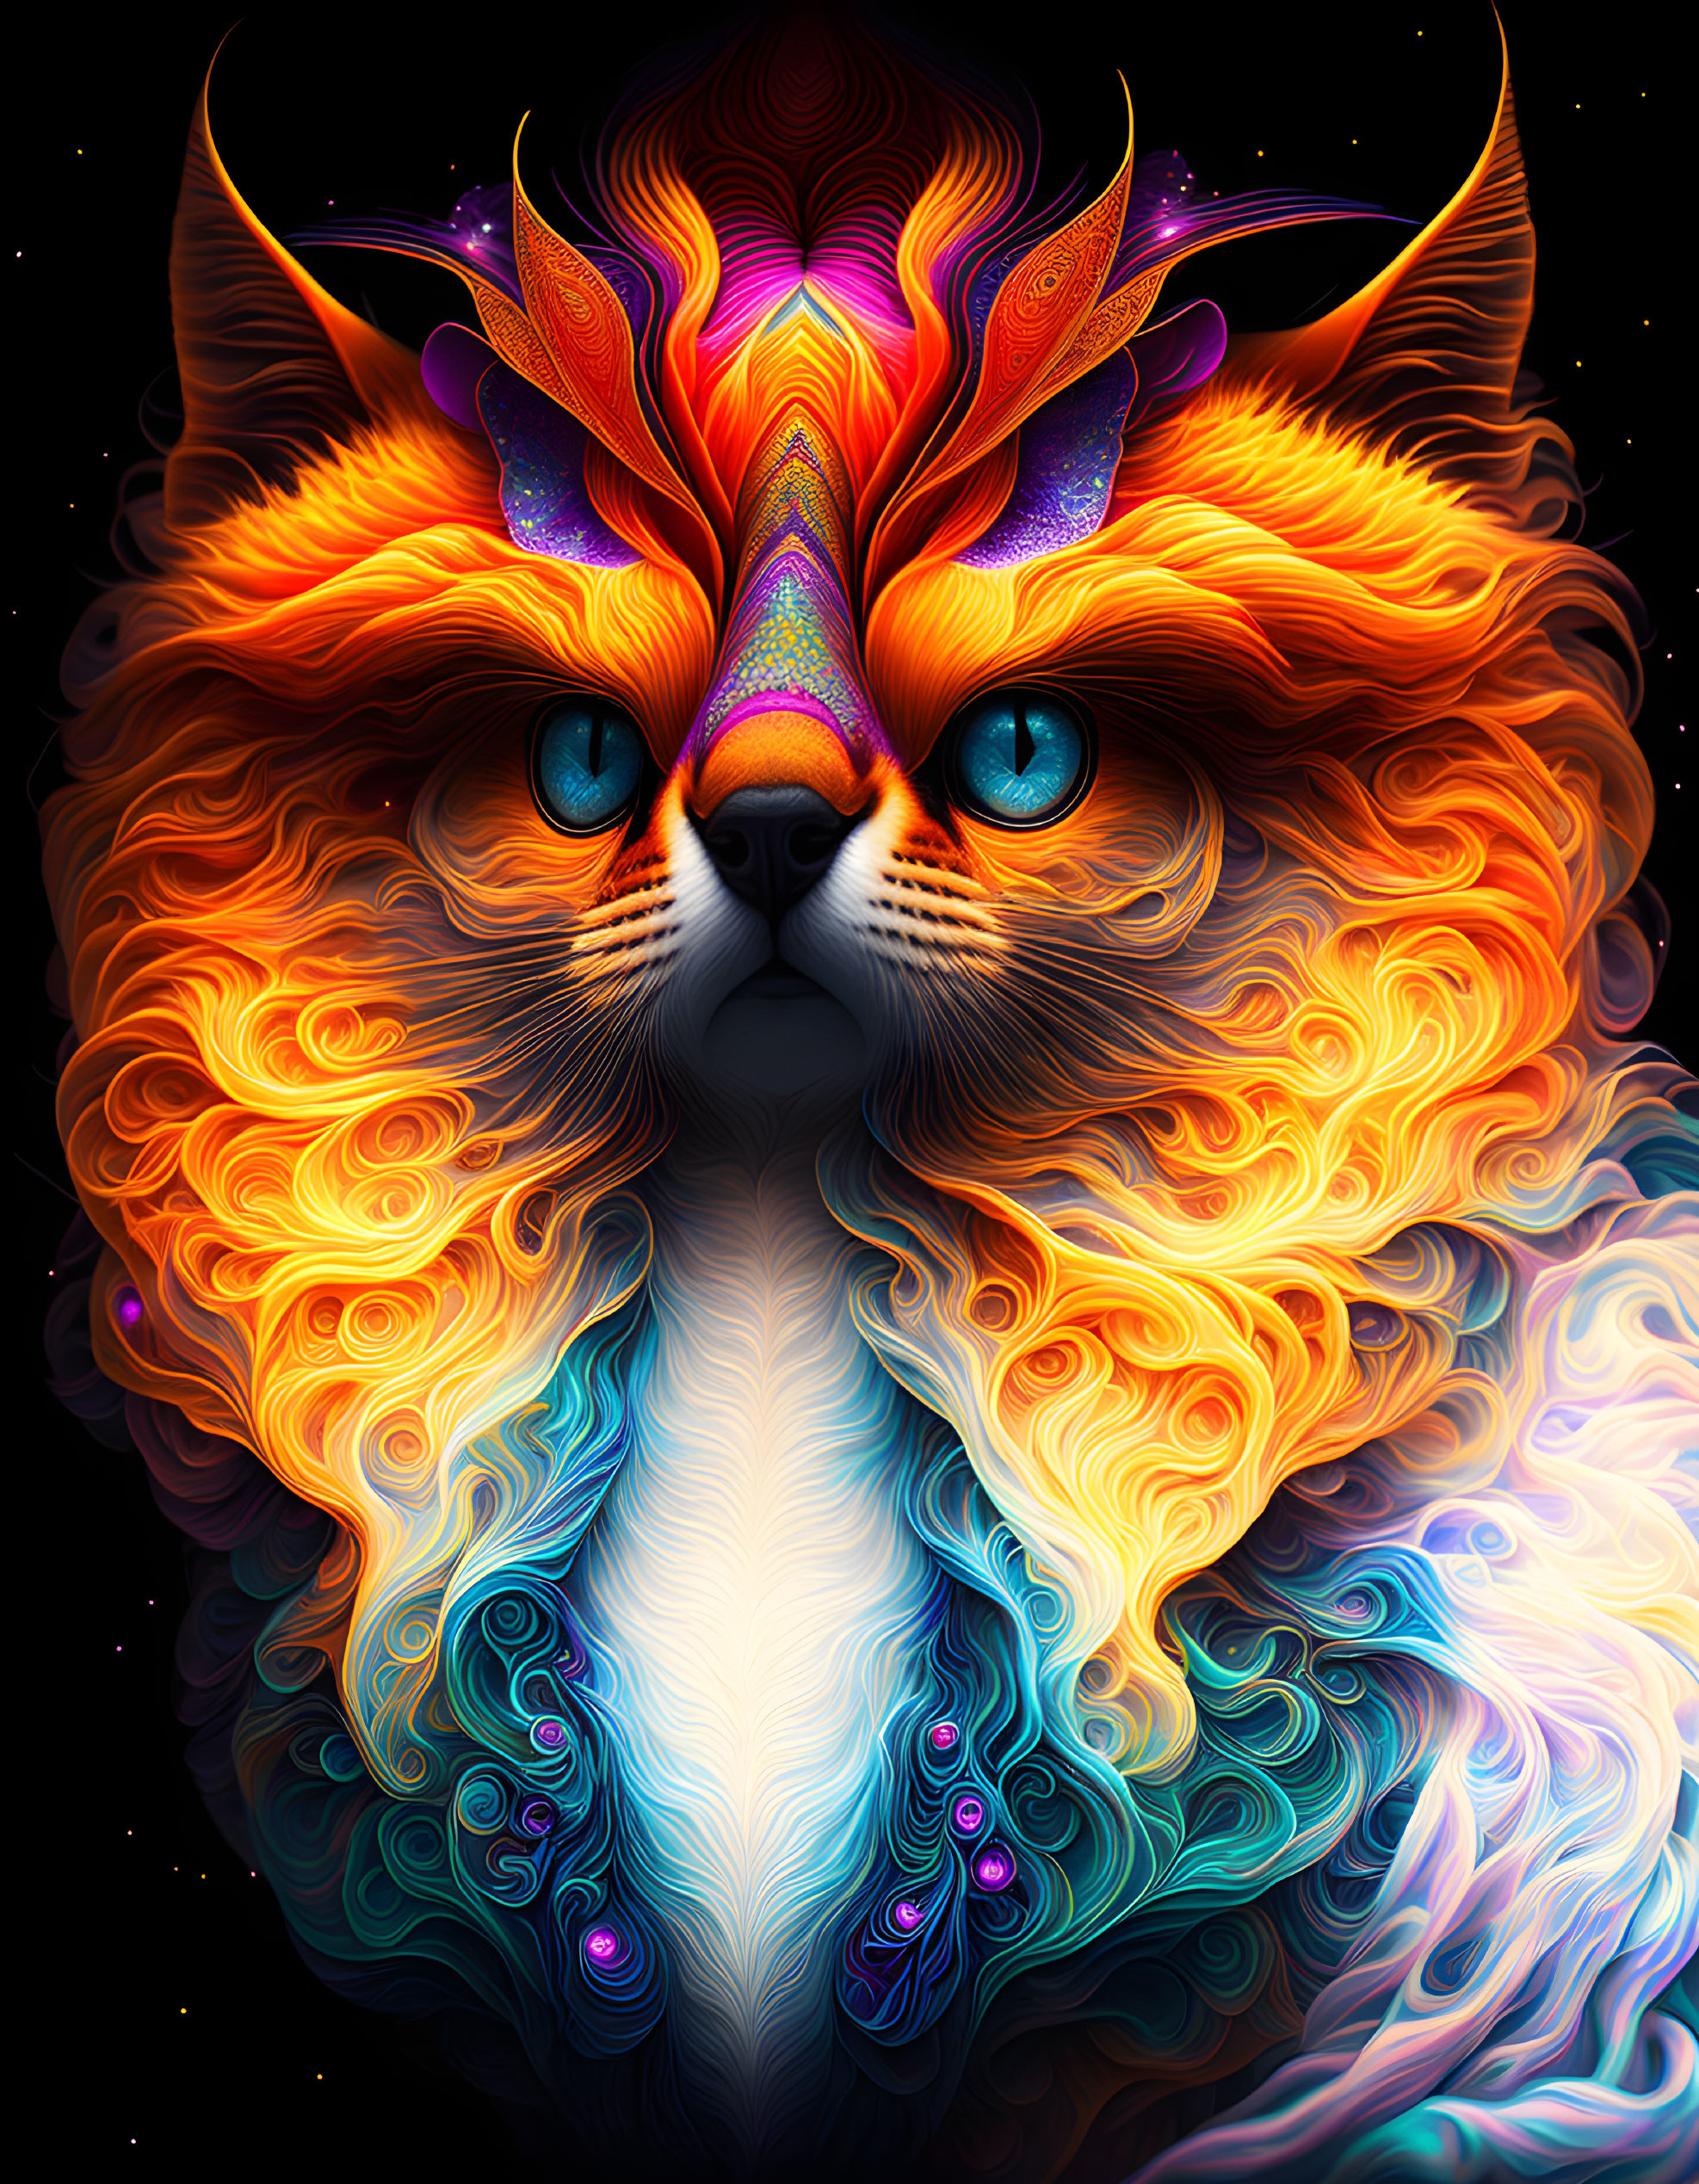 Colorful digital artwork: mystical feline with swirling patterns